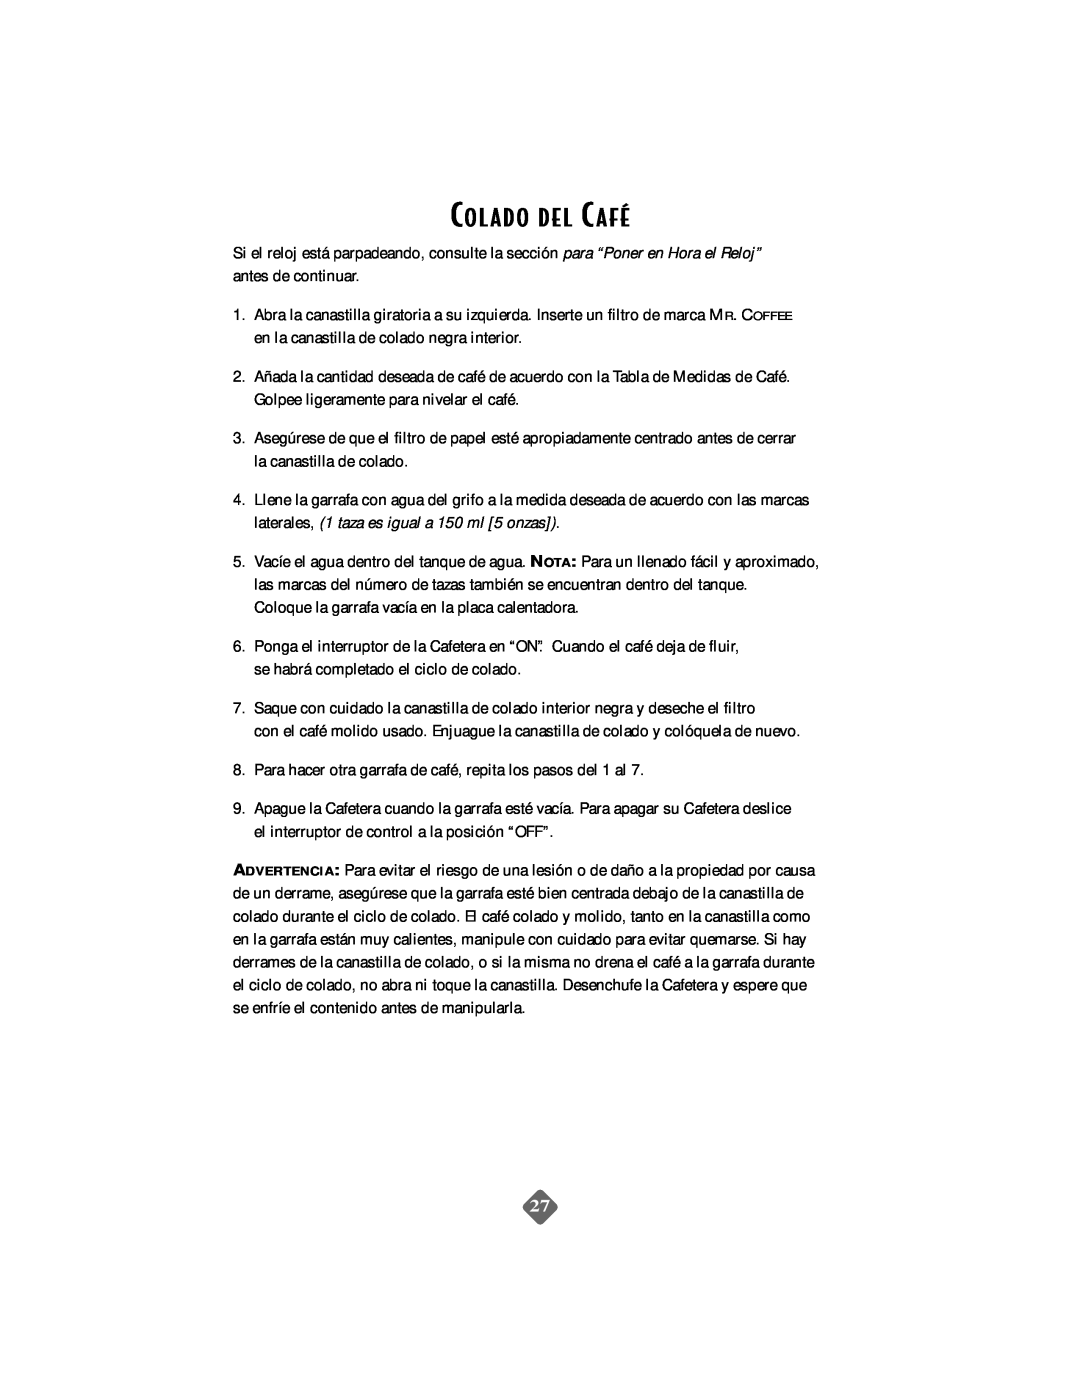 Mr. Coffee NLS12 instruction manual Col Ado Del C A Fé 